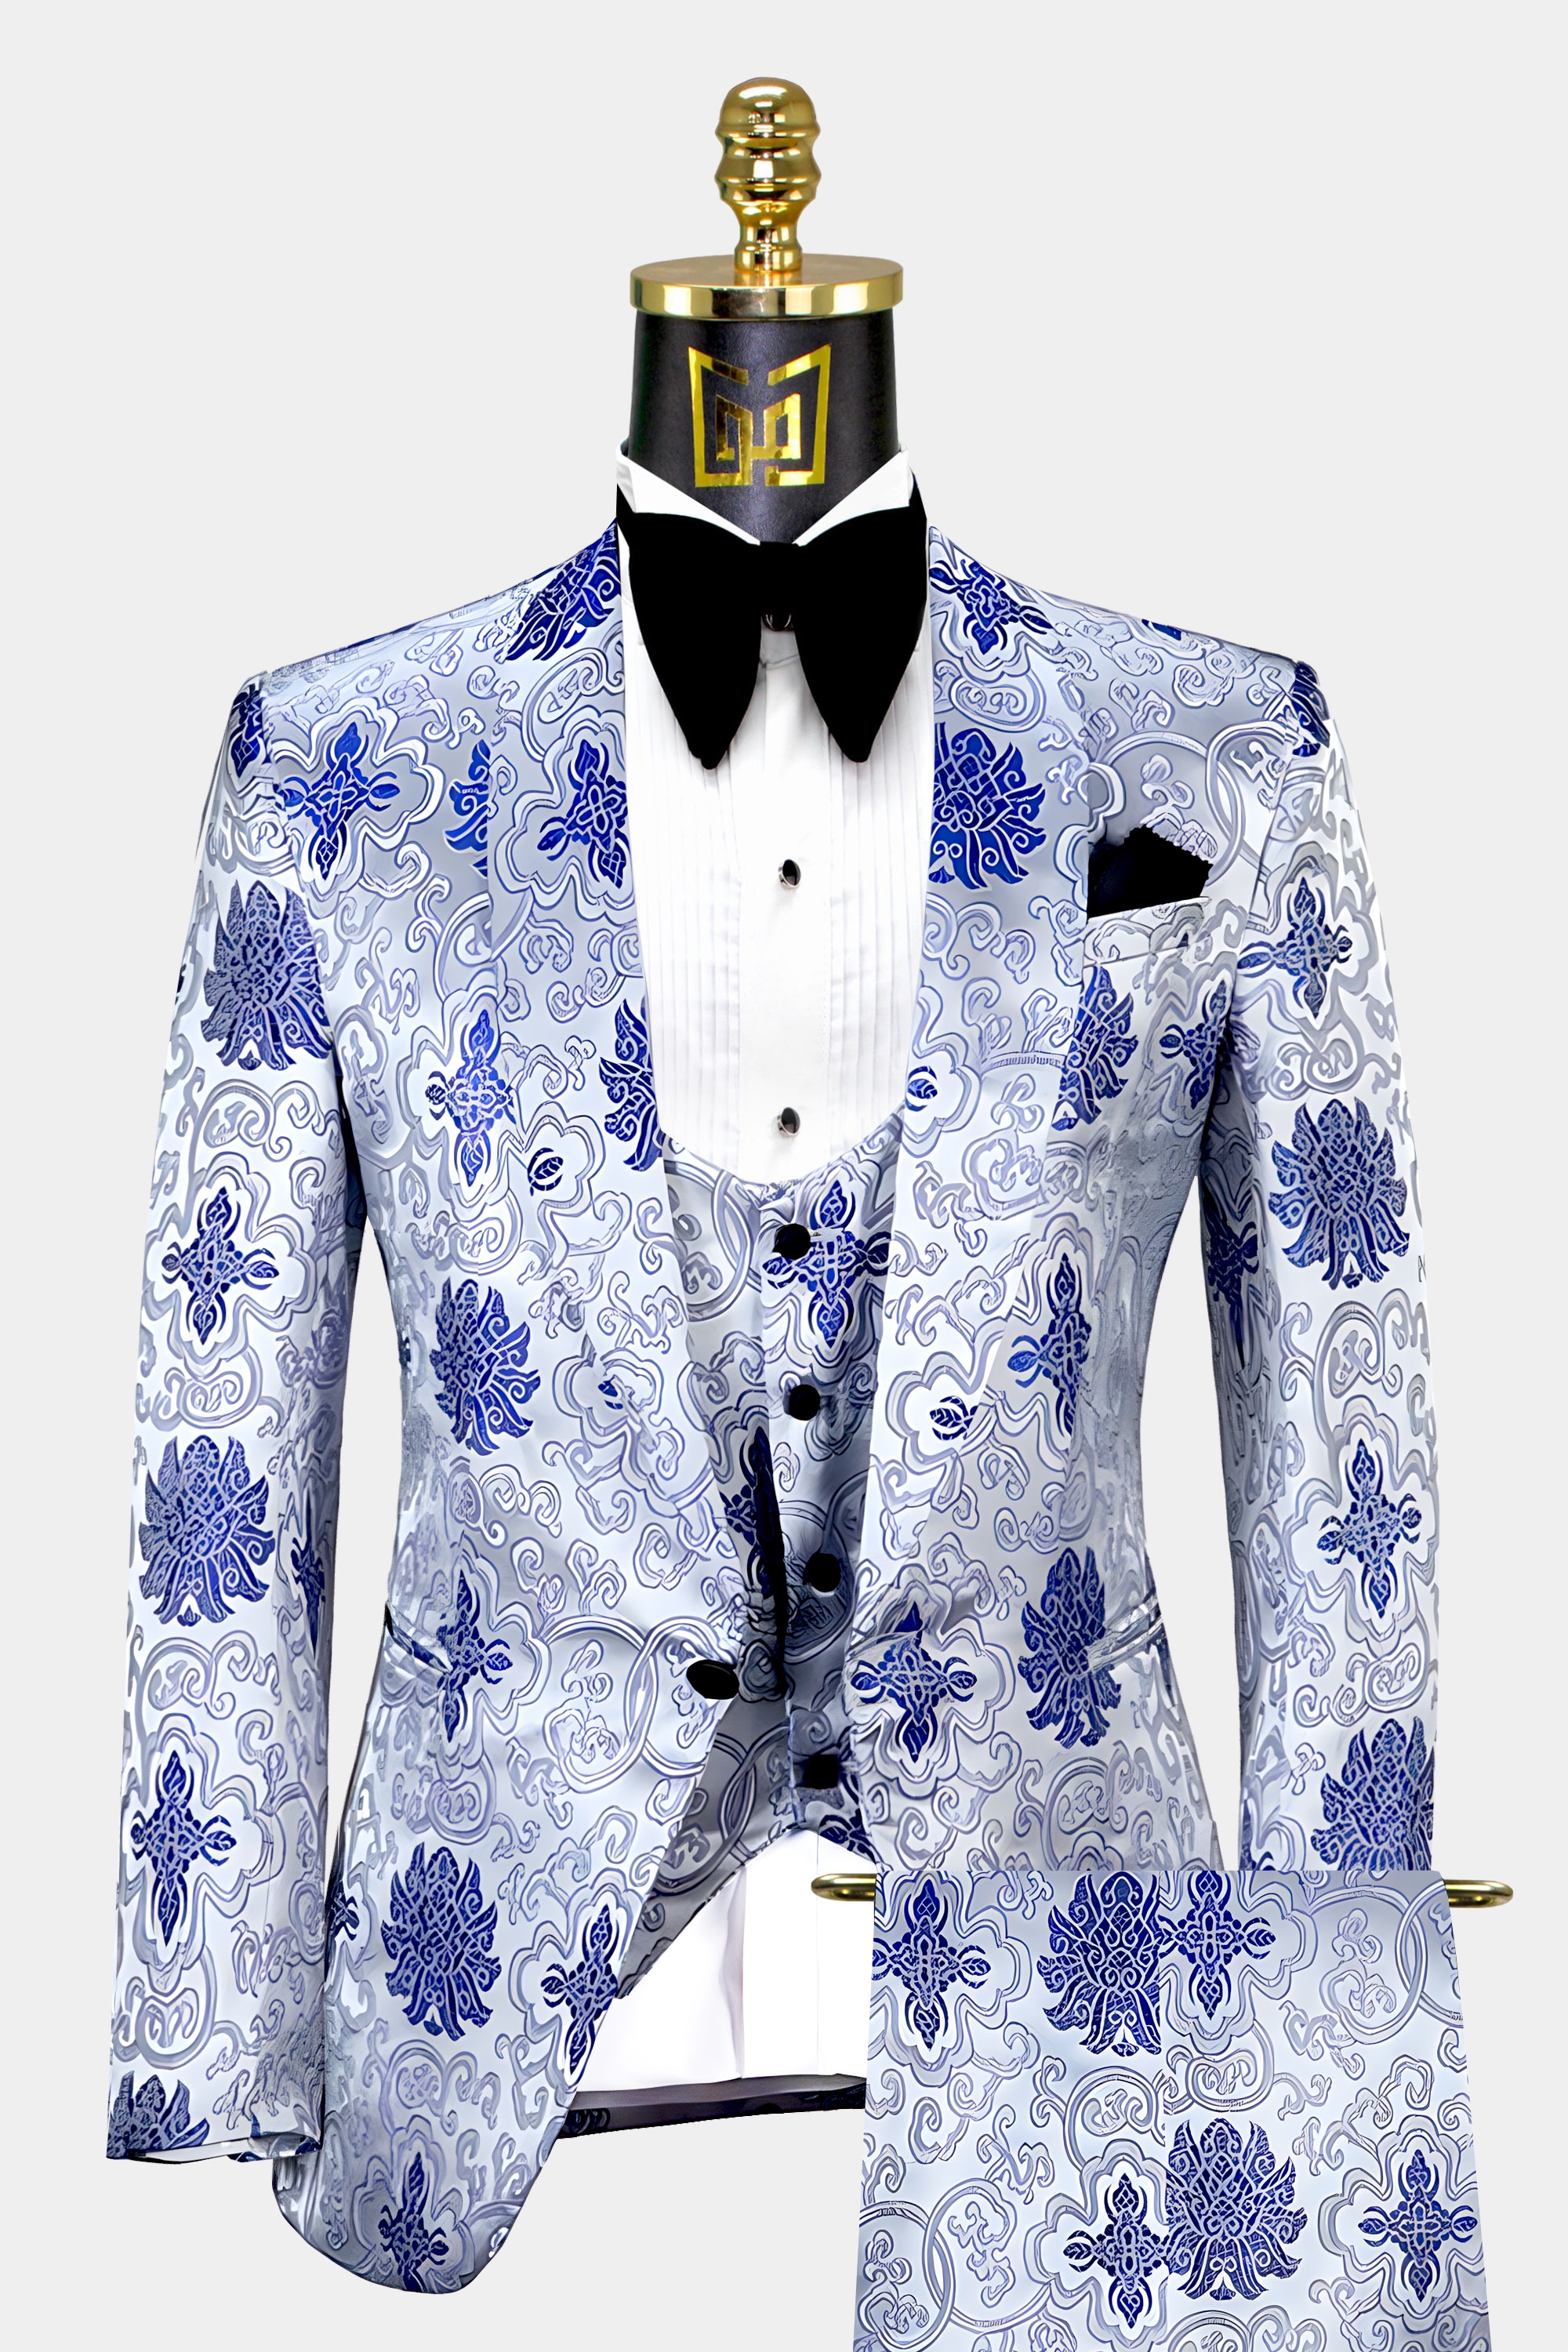 Royal Blue and Silver Tuxedo | Gentleman's Guru